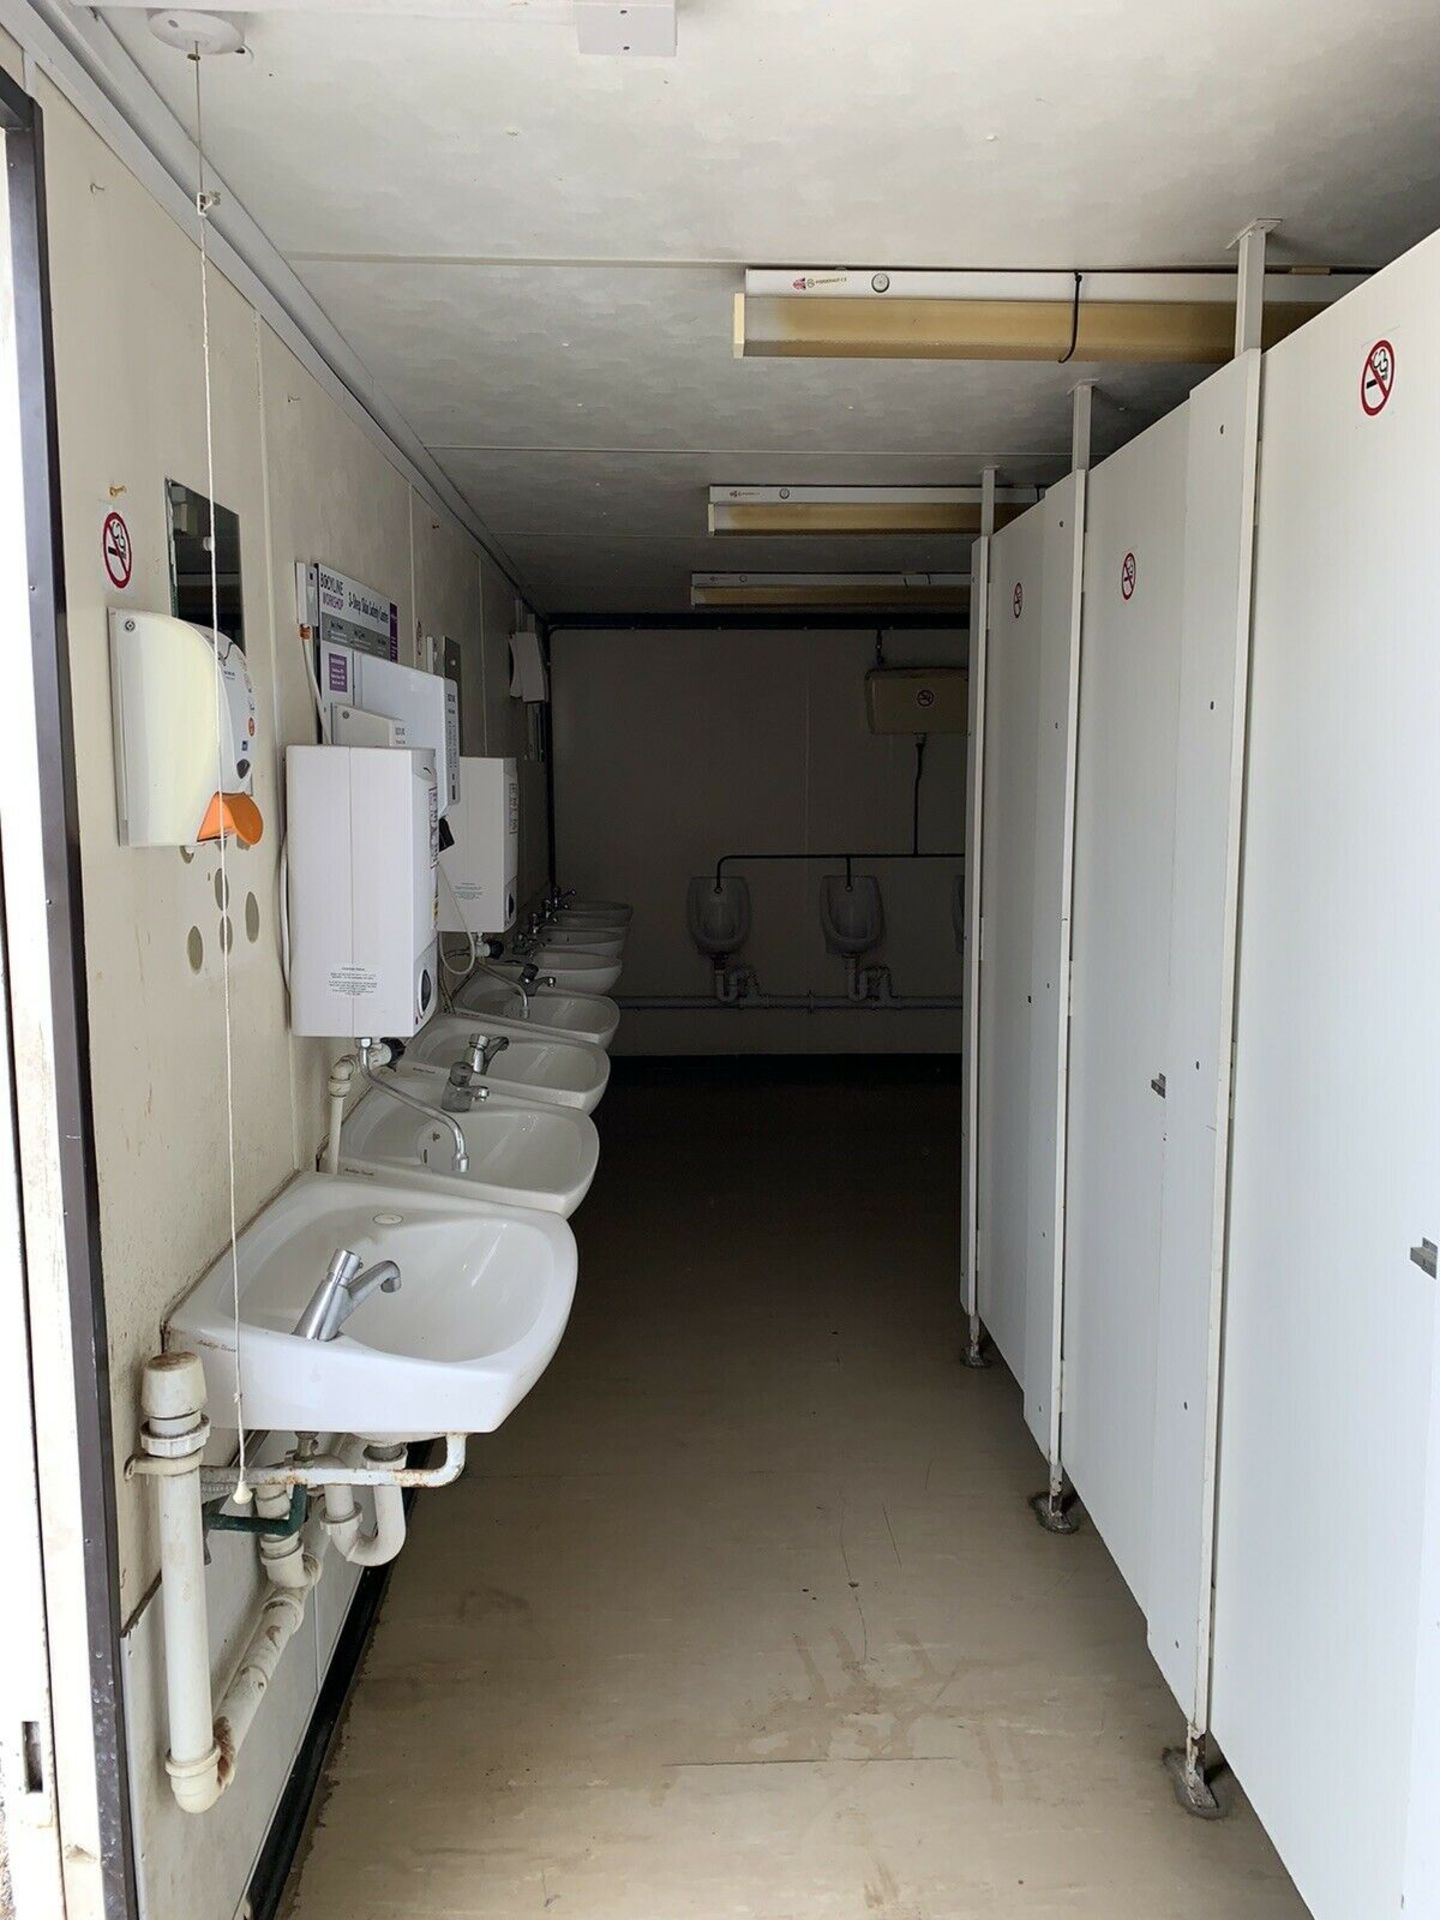 Portable Toilet Block Shower Block Toilet Containe - Image 3 of 12